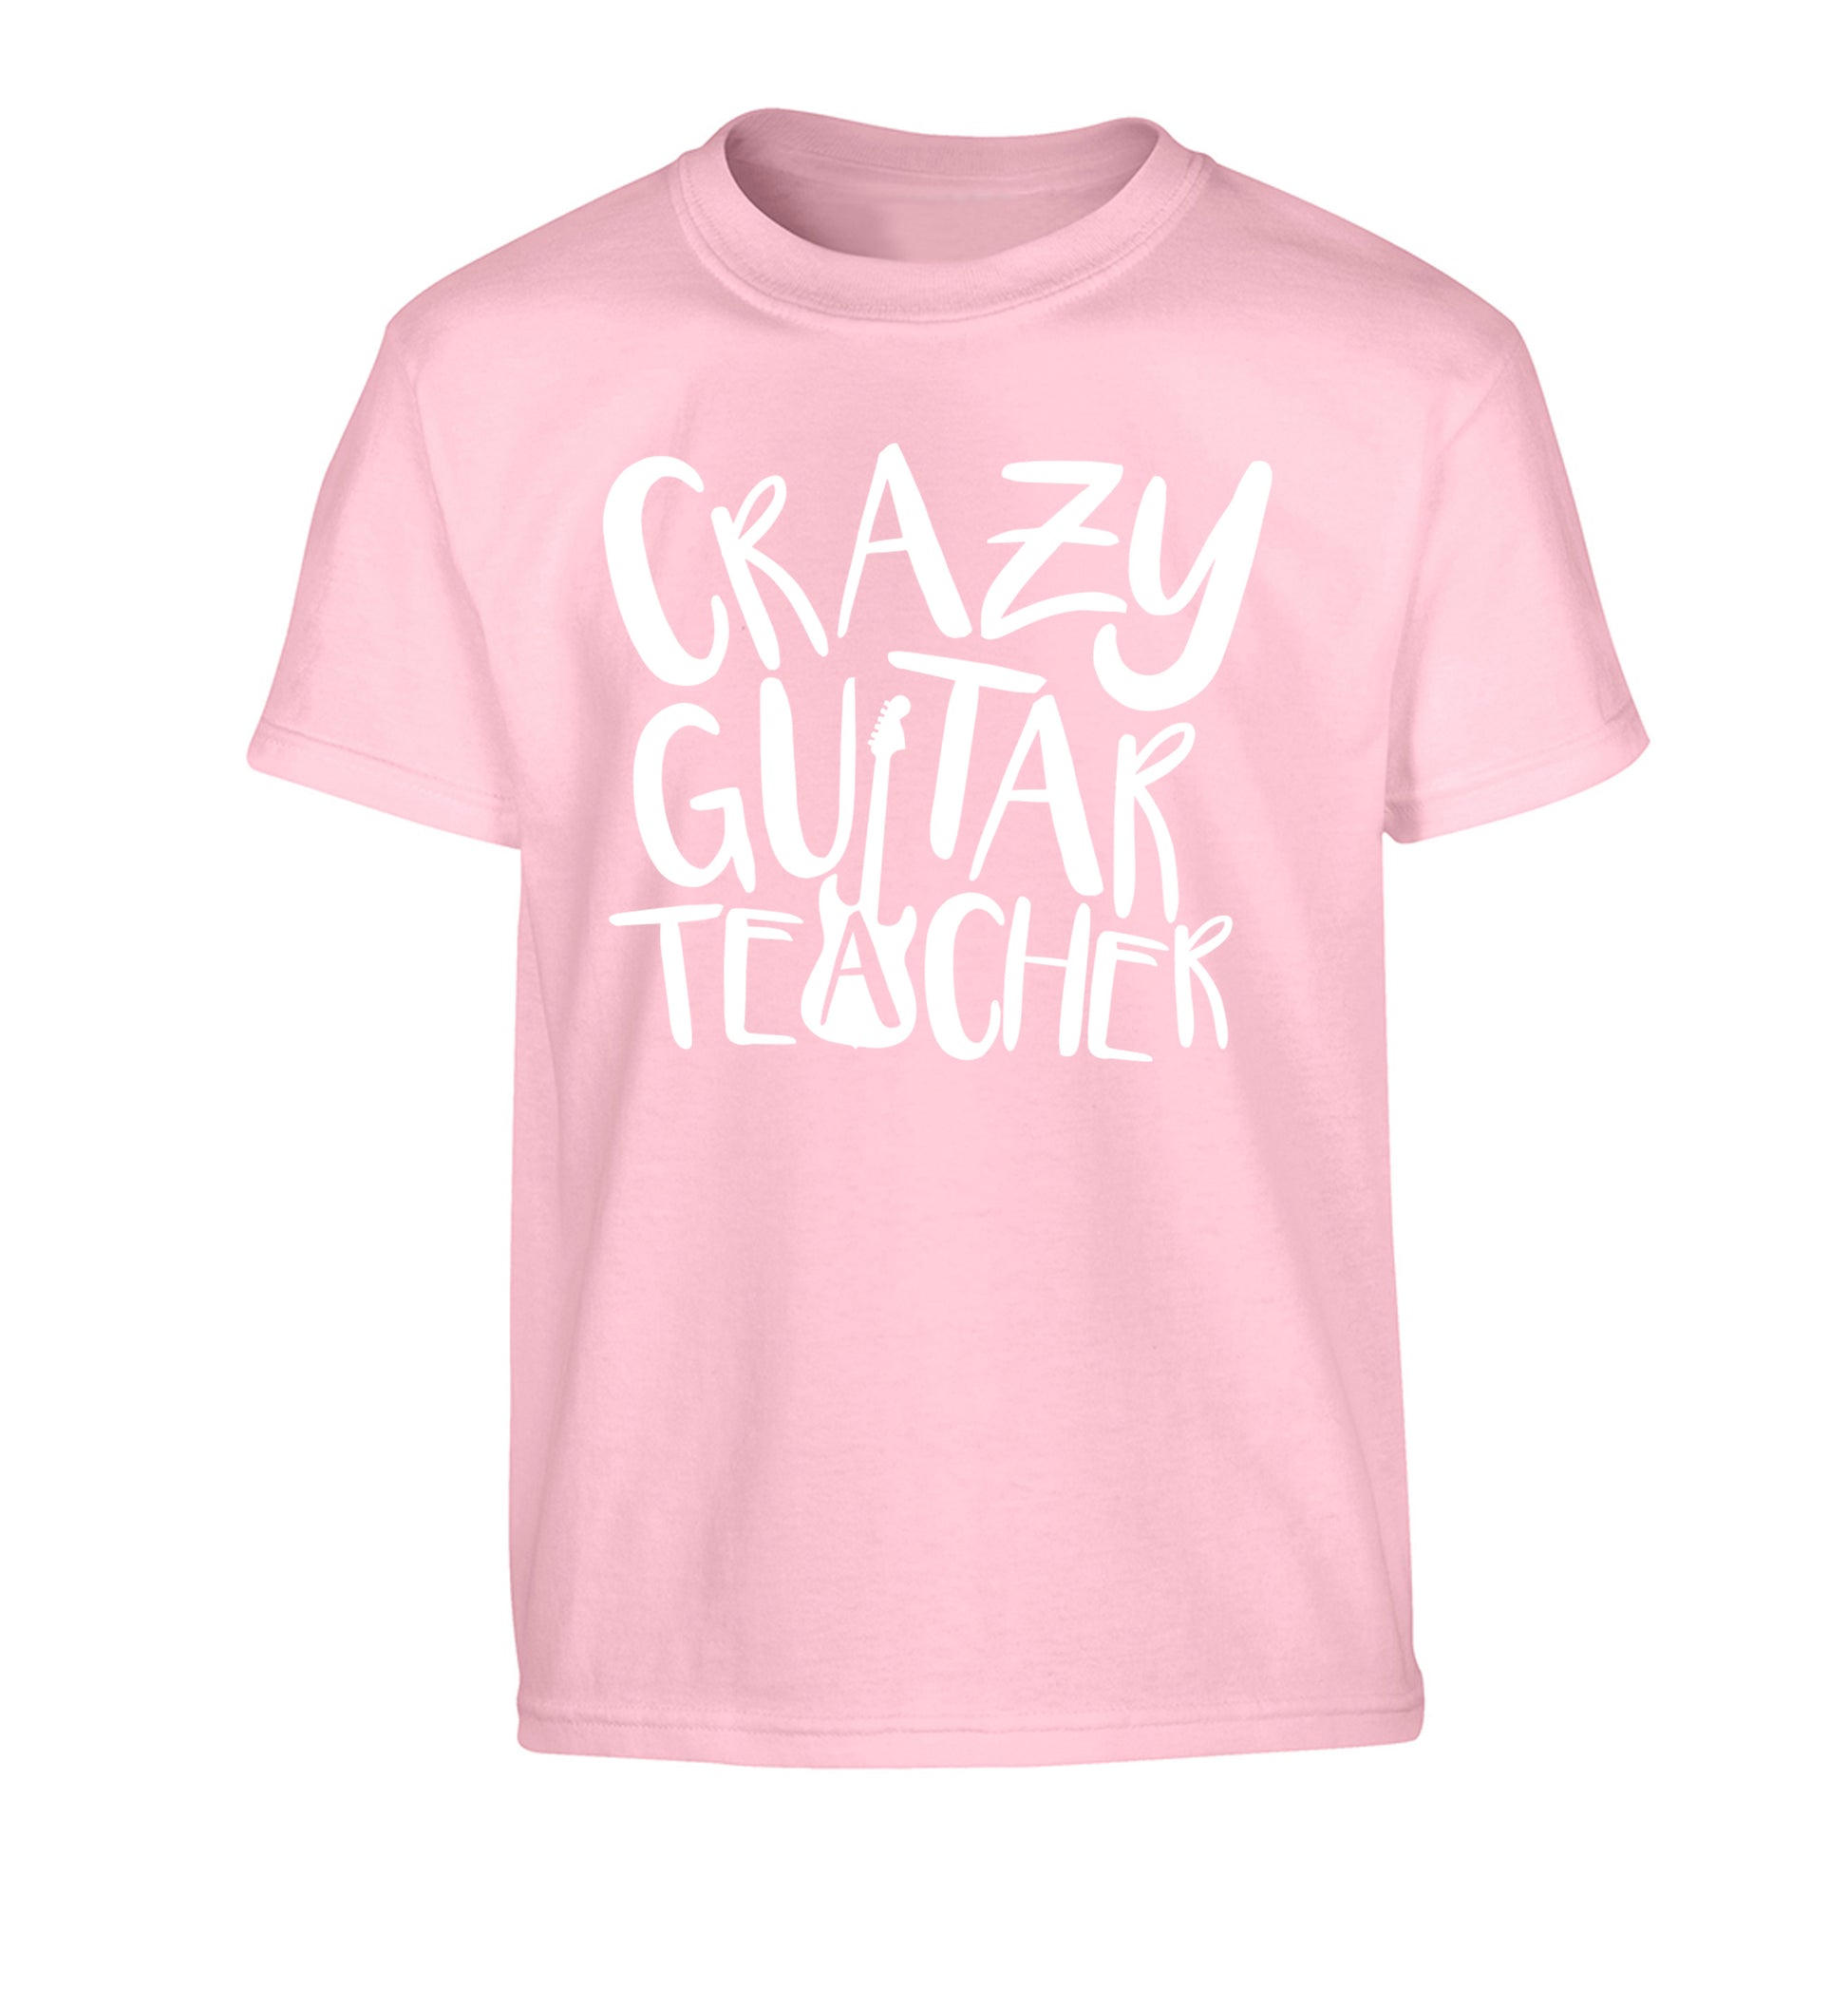 Crazy guitar teacher Children's light pink Tshirt 12-13 Years